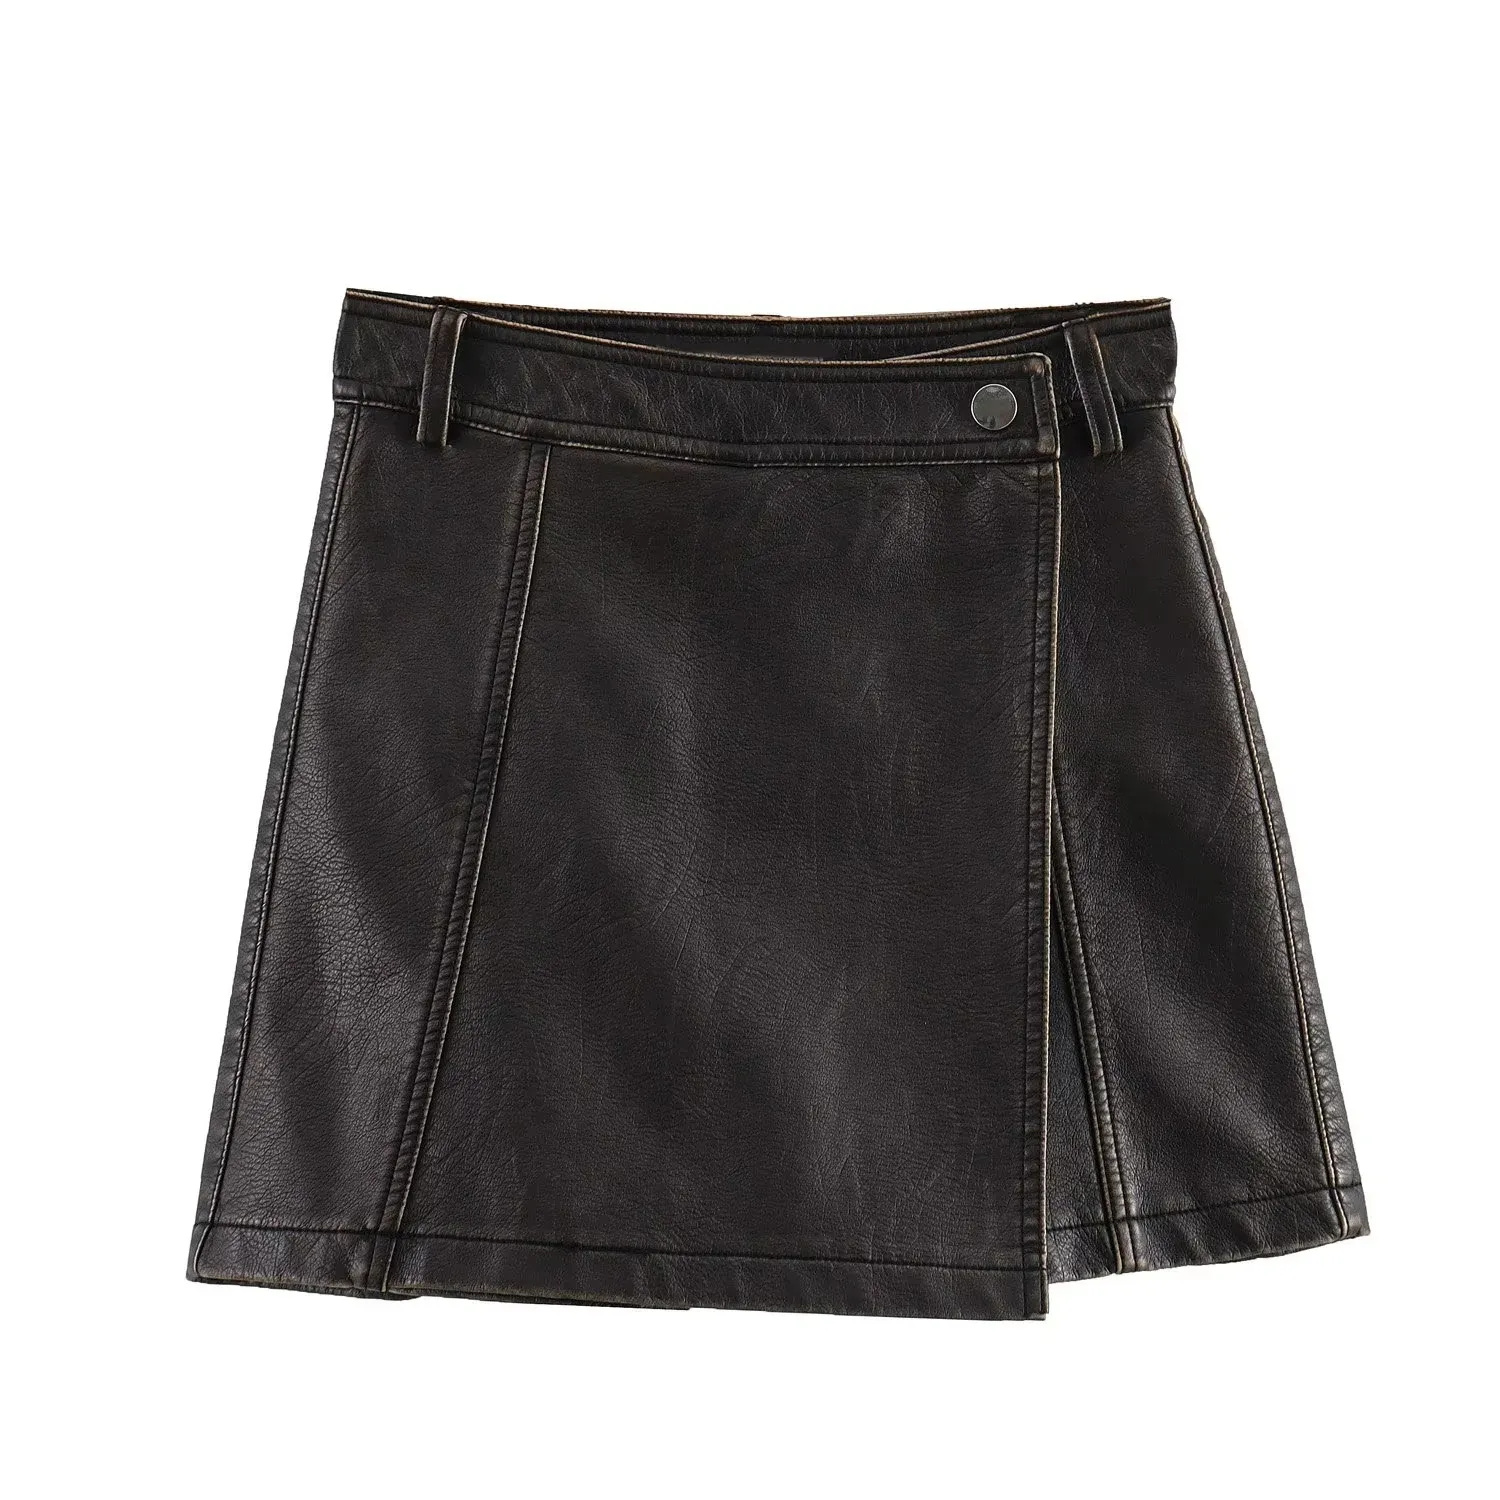 KAOPU ZA Women leather effect wrap type mini skort vintage high waist zipper skirts mujer